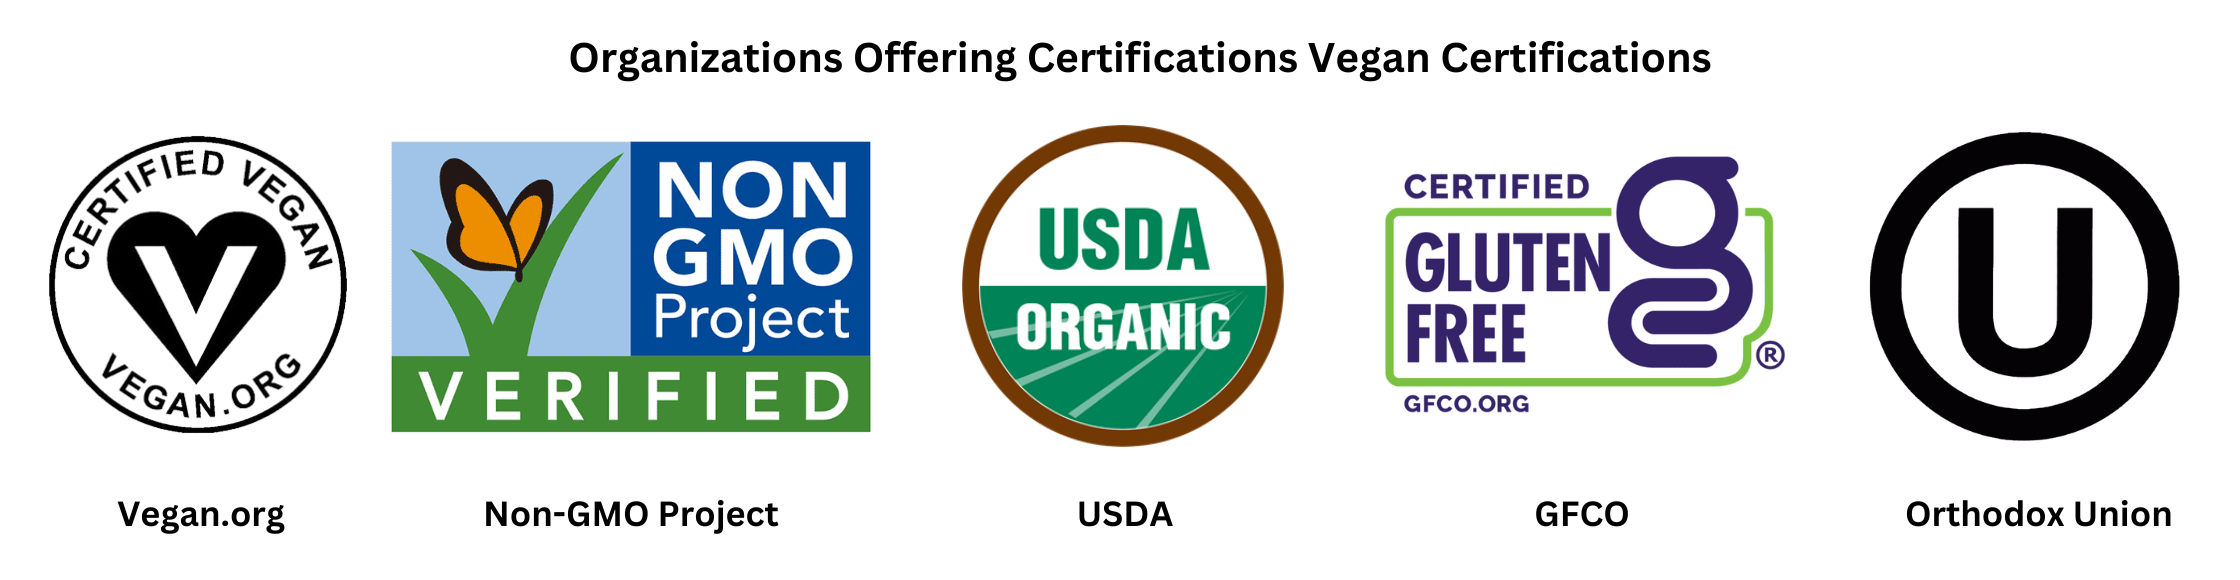 Organizations Offering Certifications Vegan Certifications